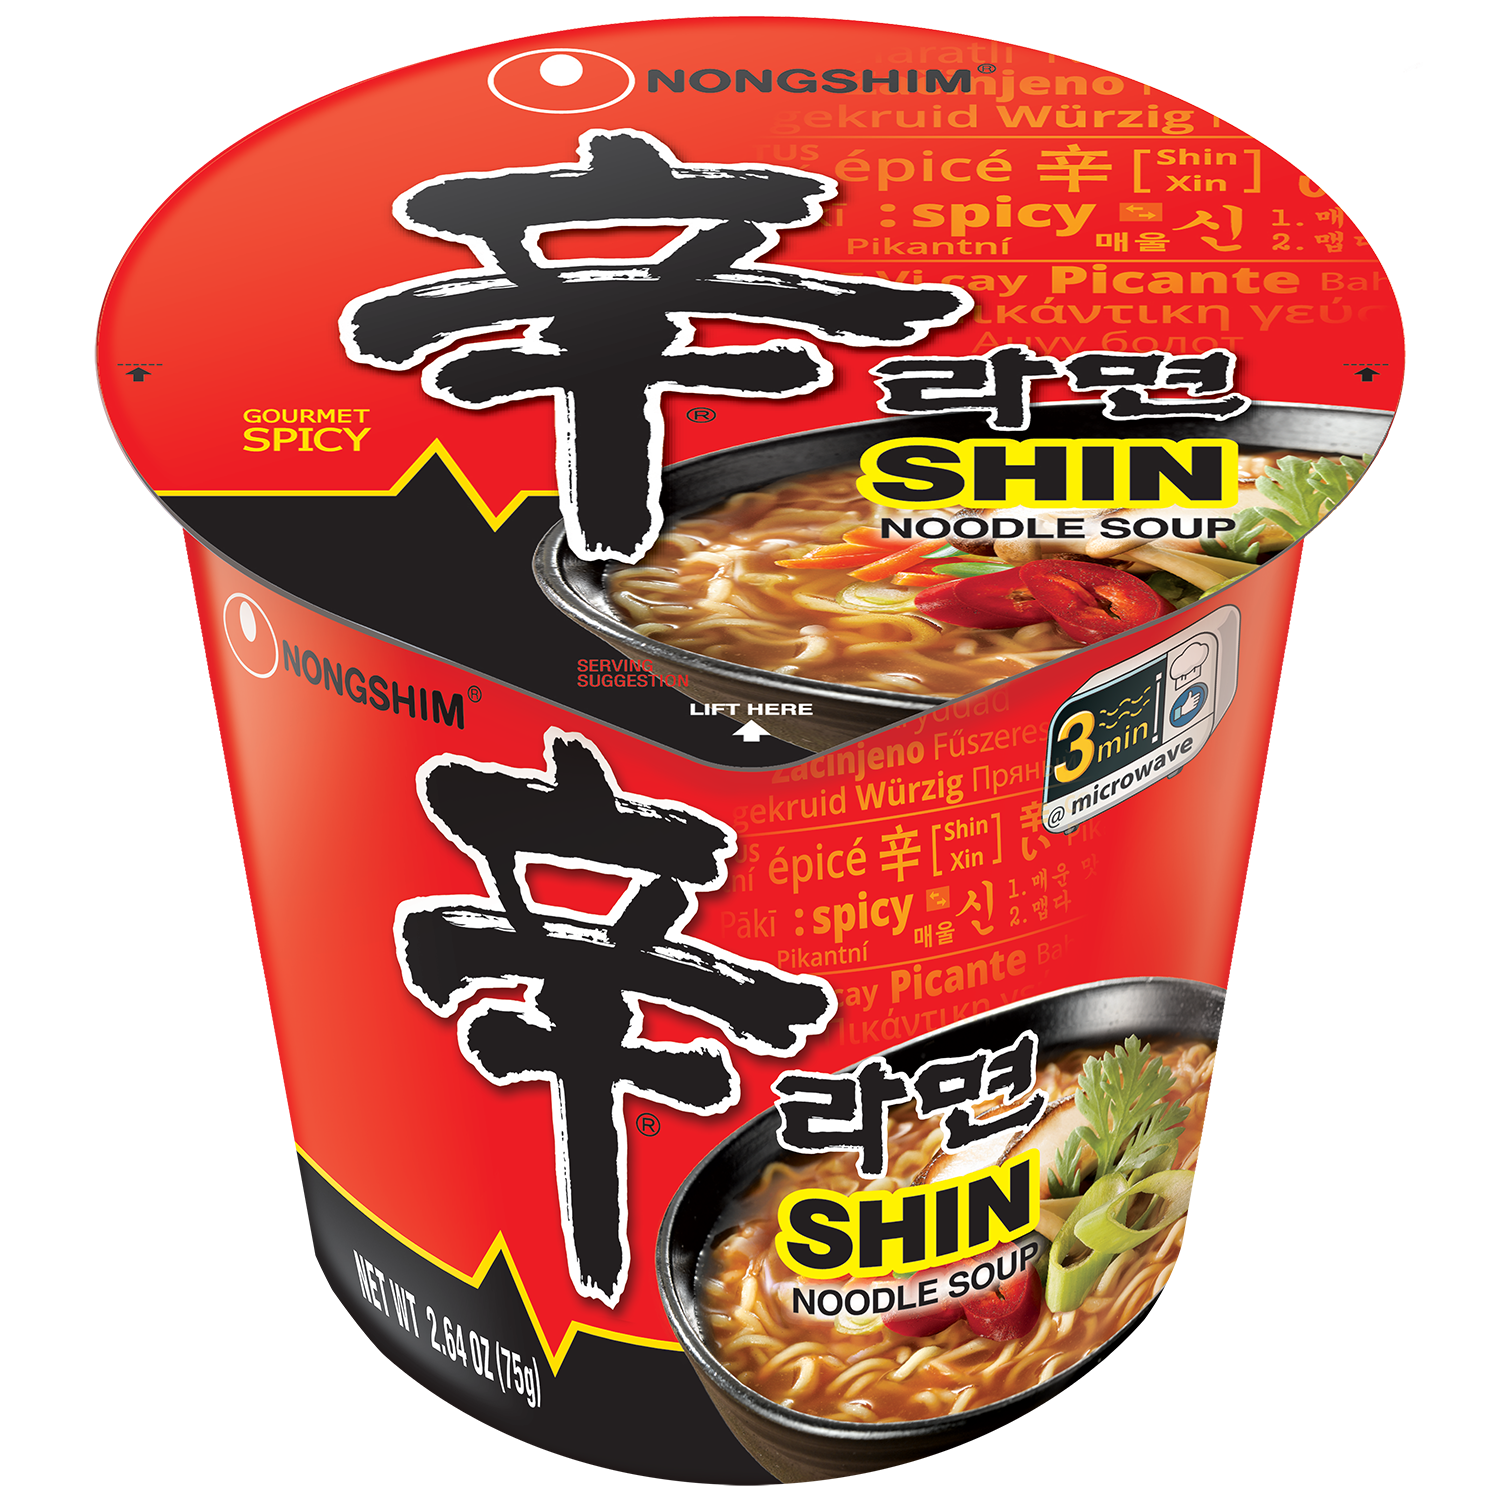 Nongshim Shin Beef Cup Noodle Soup 6 pack